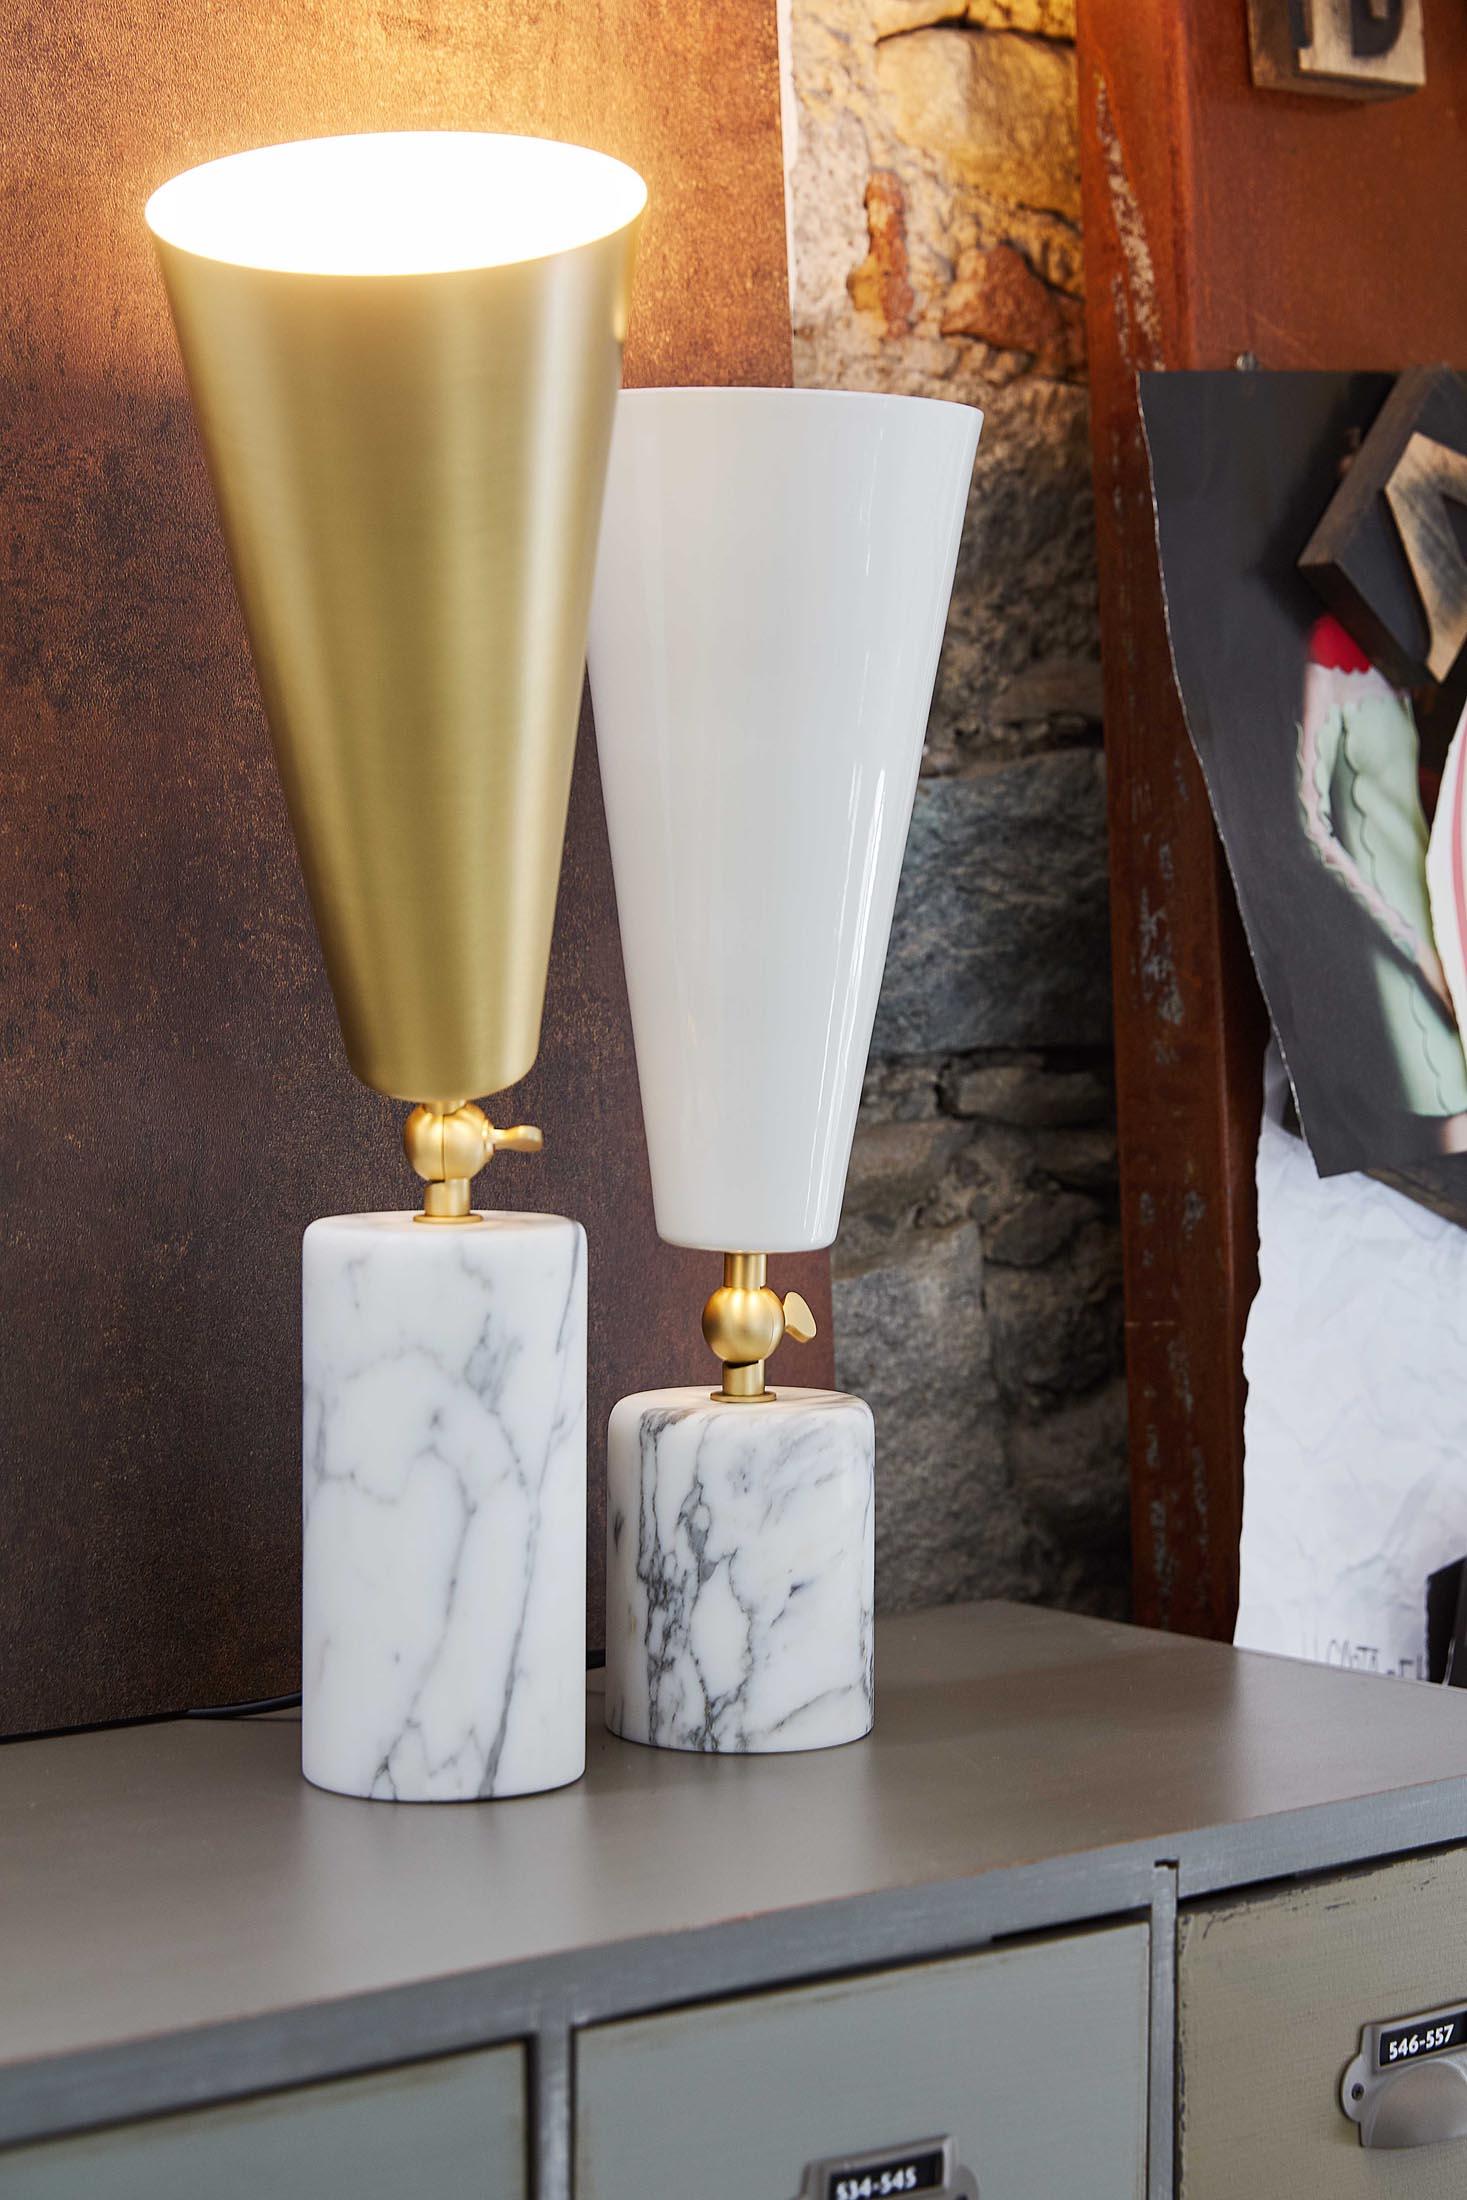 Tato Italia 'Vox' Table Lamp in Black Marquinia Marble, Chrome, and White For Sale 4